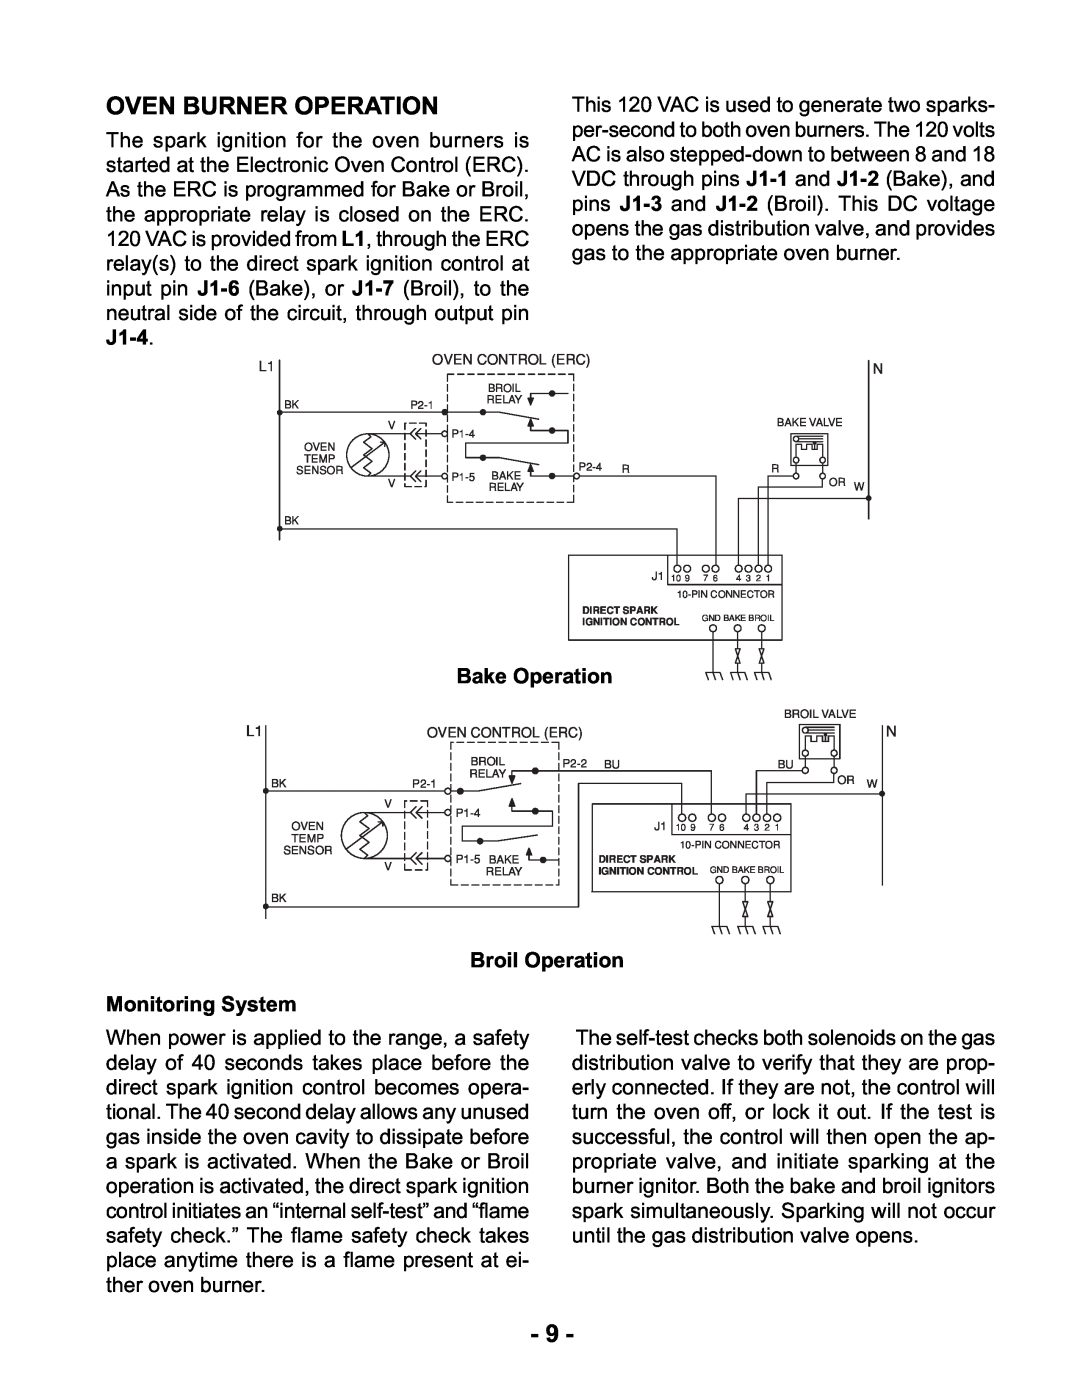 Whirlpool KR-28 manual Oven Burner Operation, Bake Operation, Broil Operation Monitoring System 